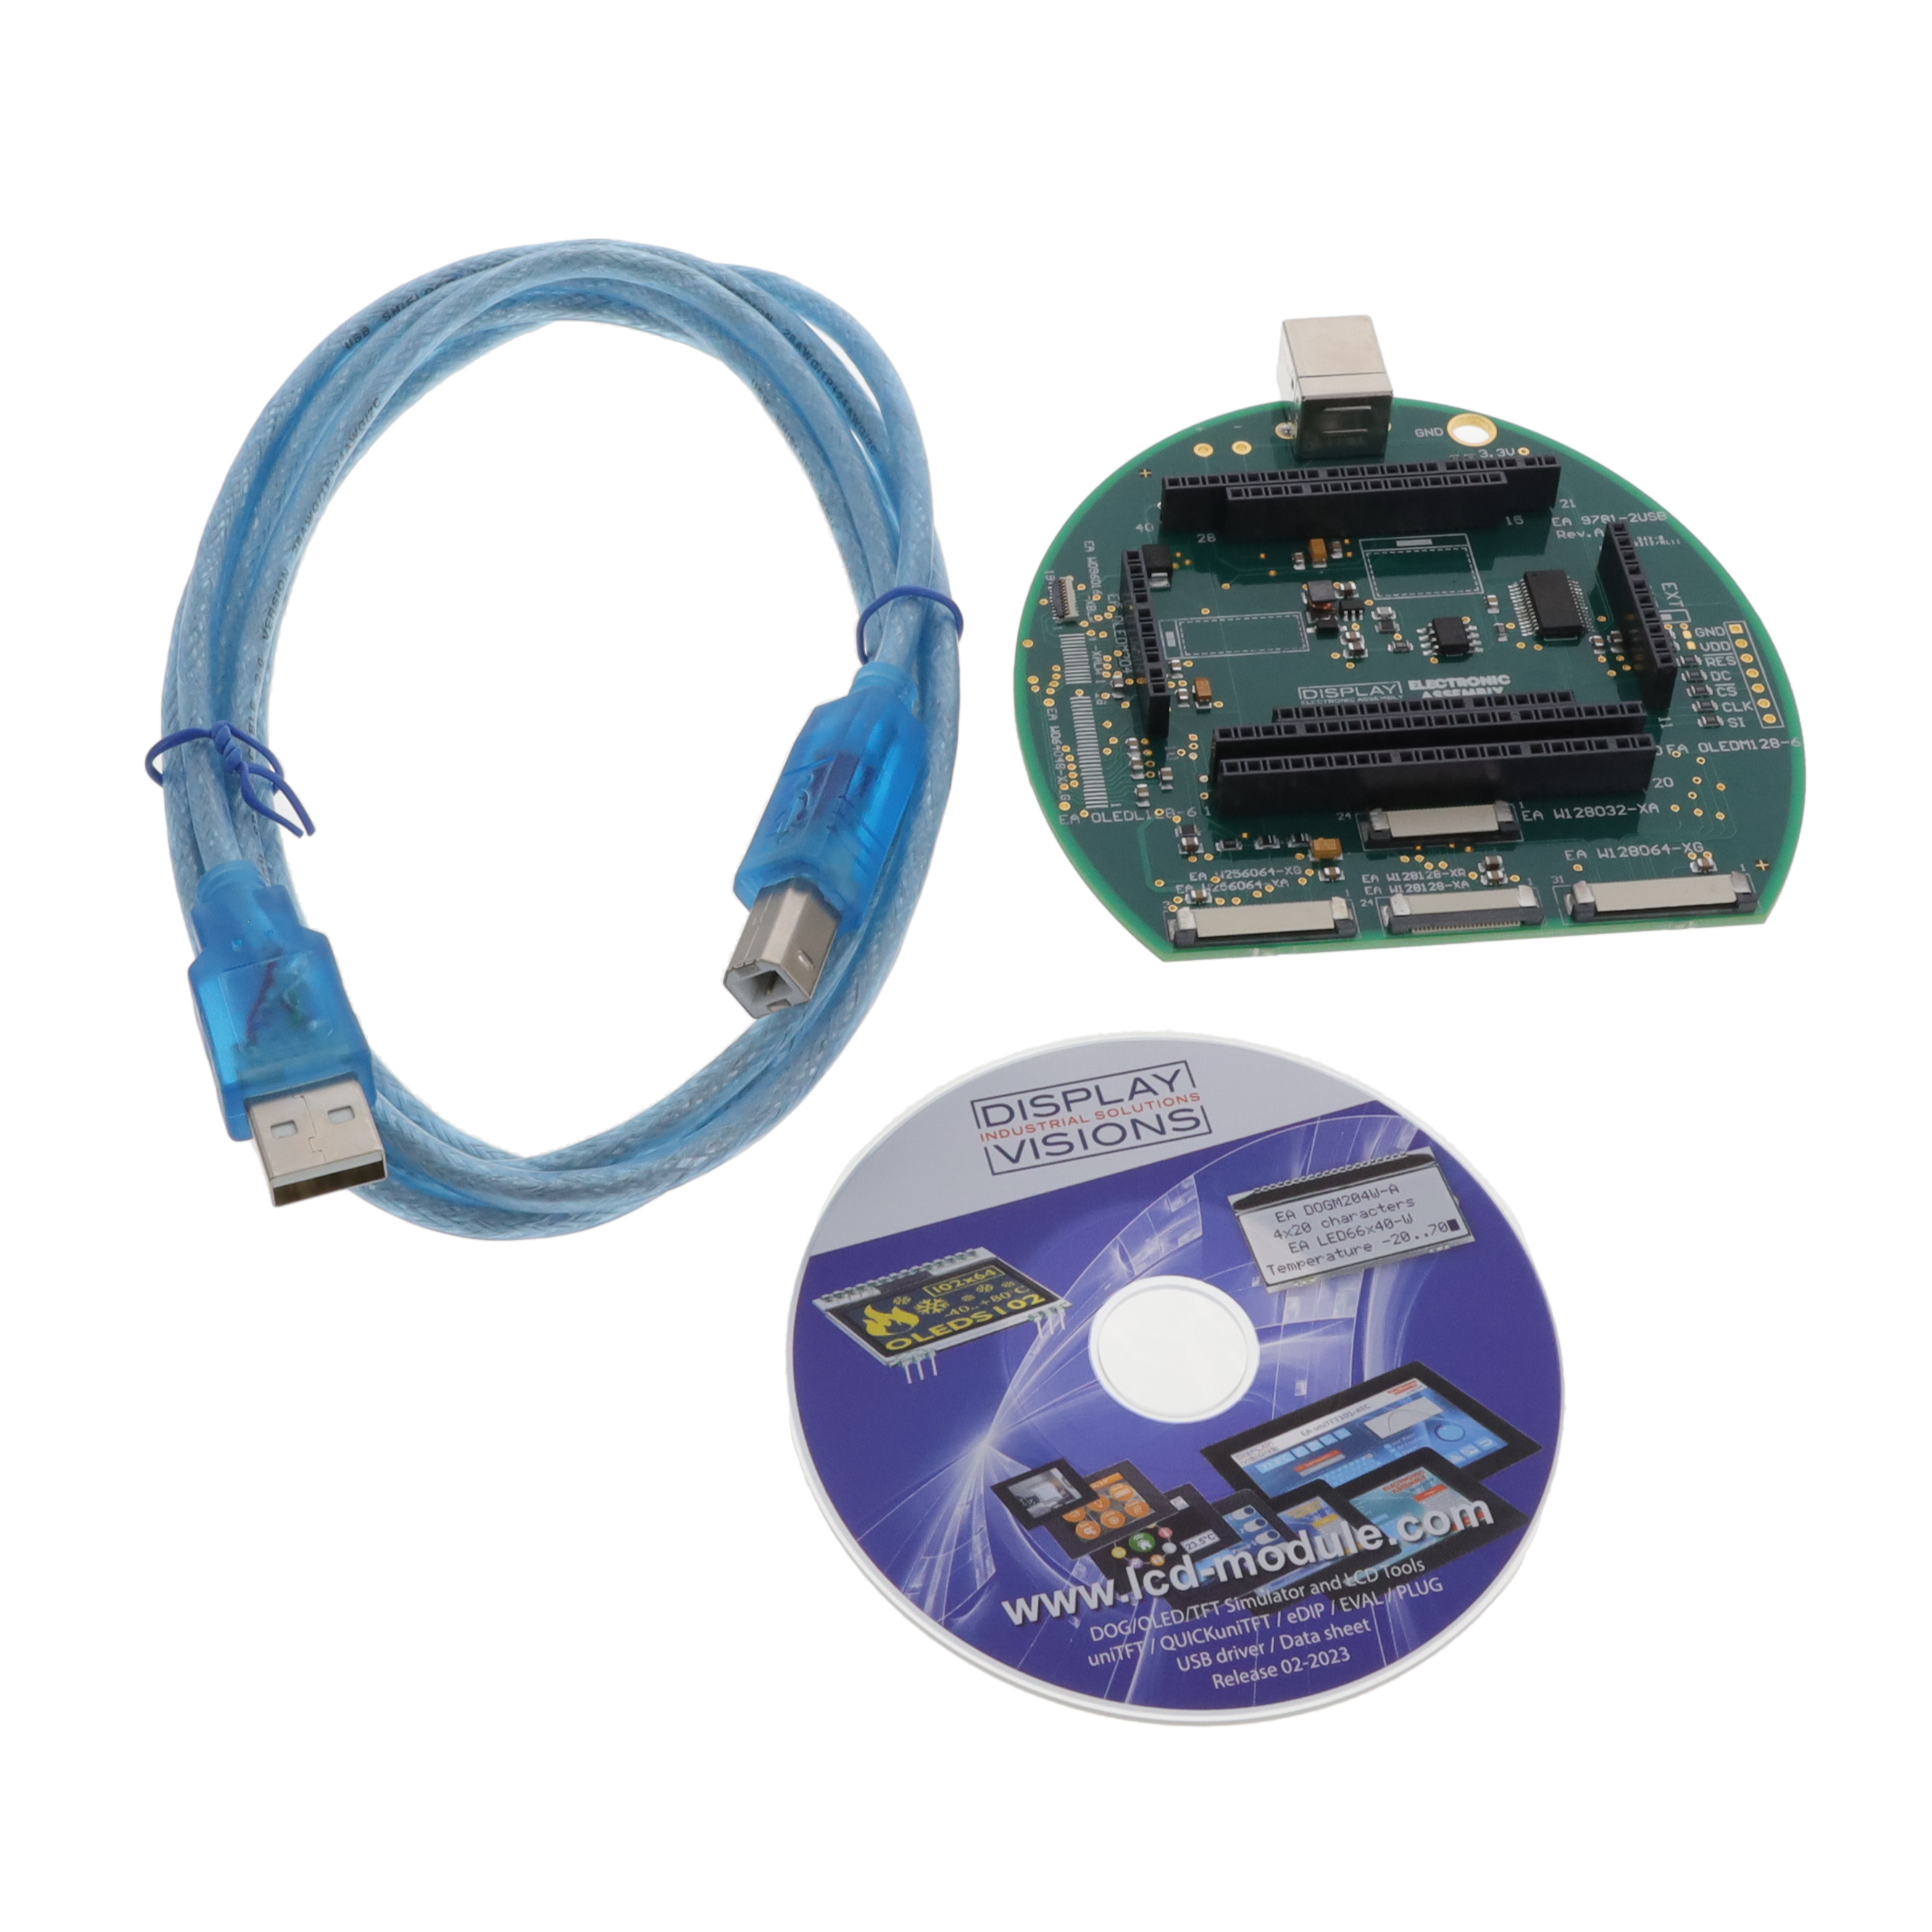 【EA 9781-2USB】USB-TEST BOARD FOR OLED